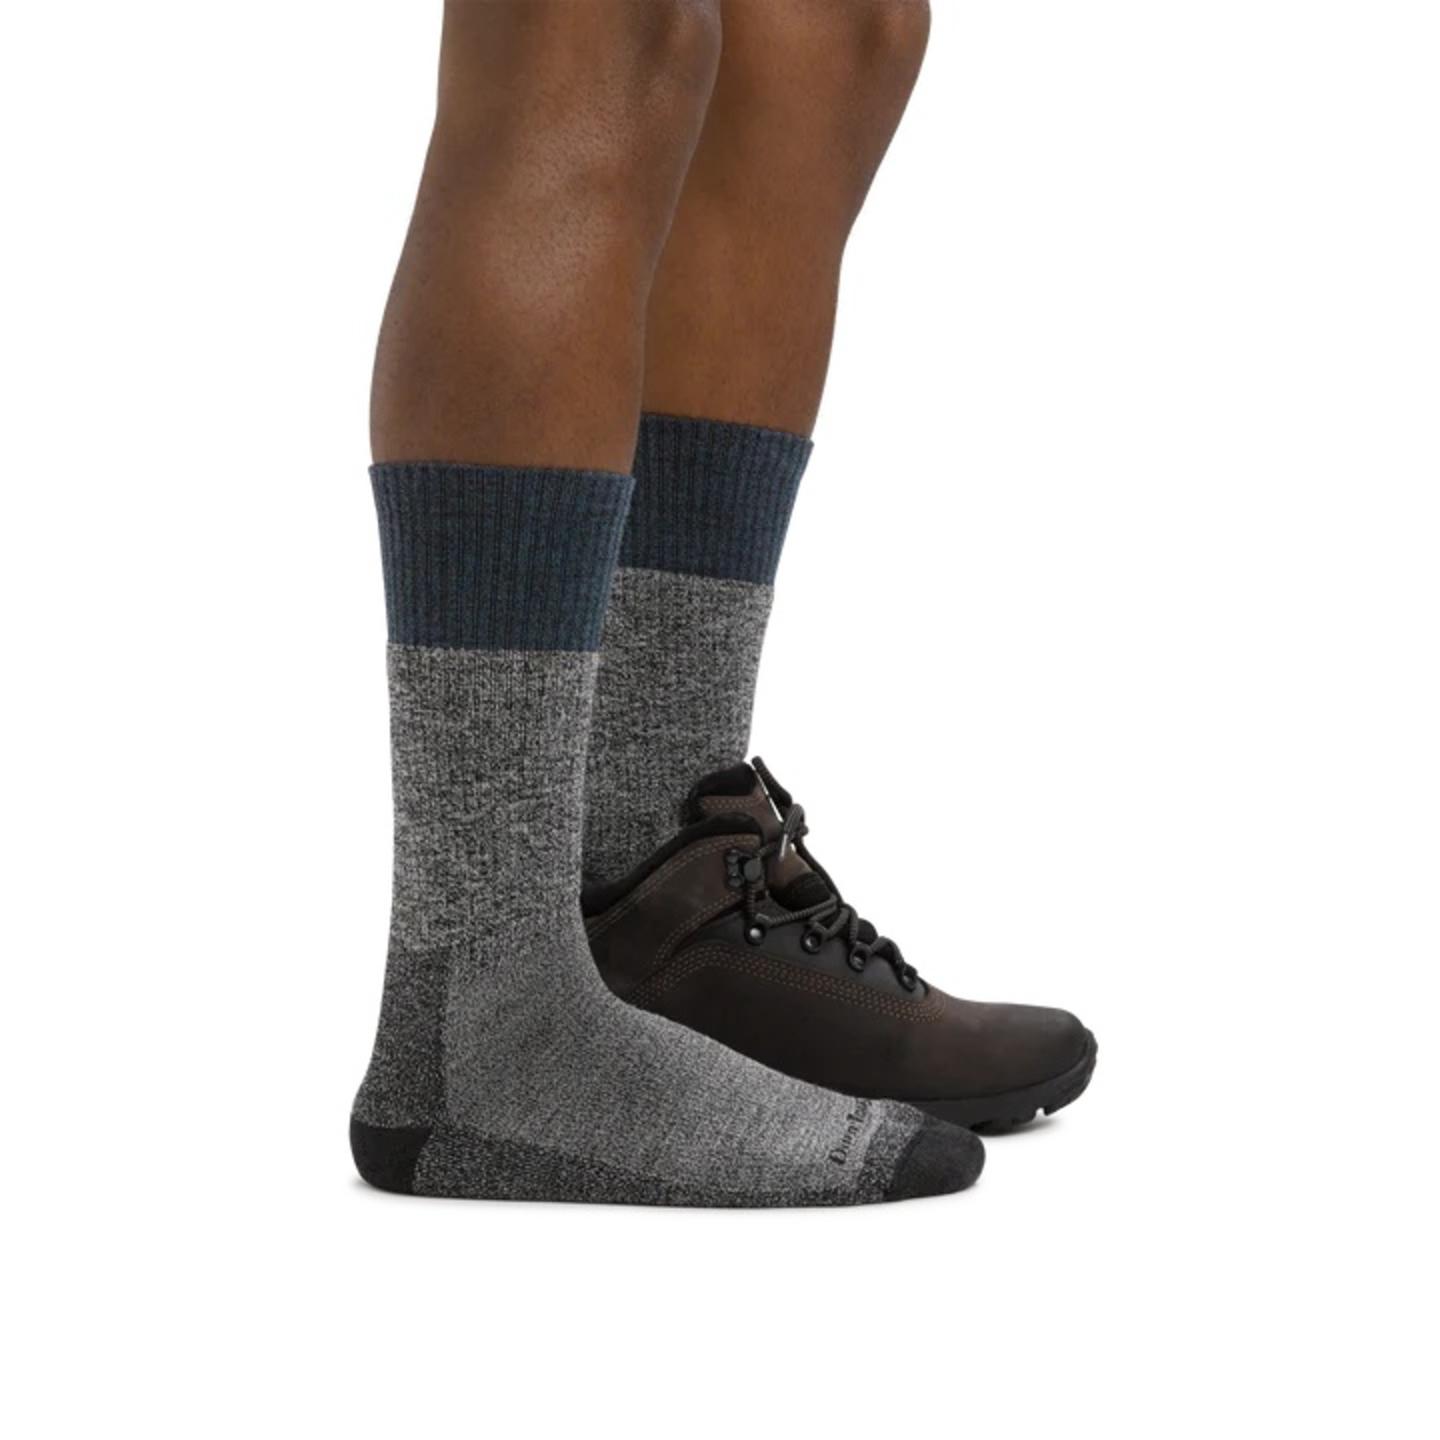 Darn Tough Men's Scout Boot Midweight Hiking Sock